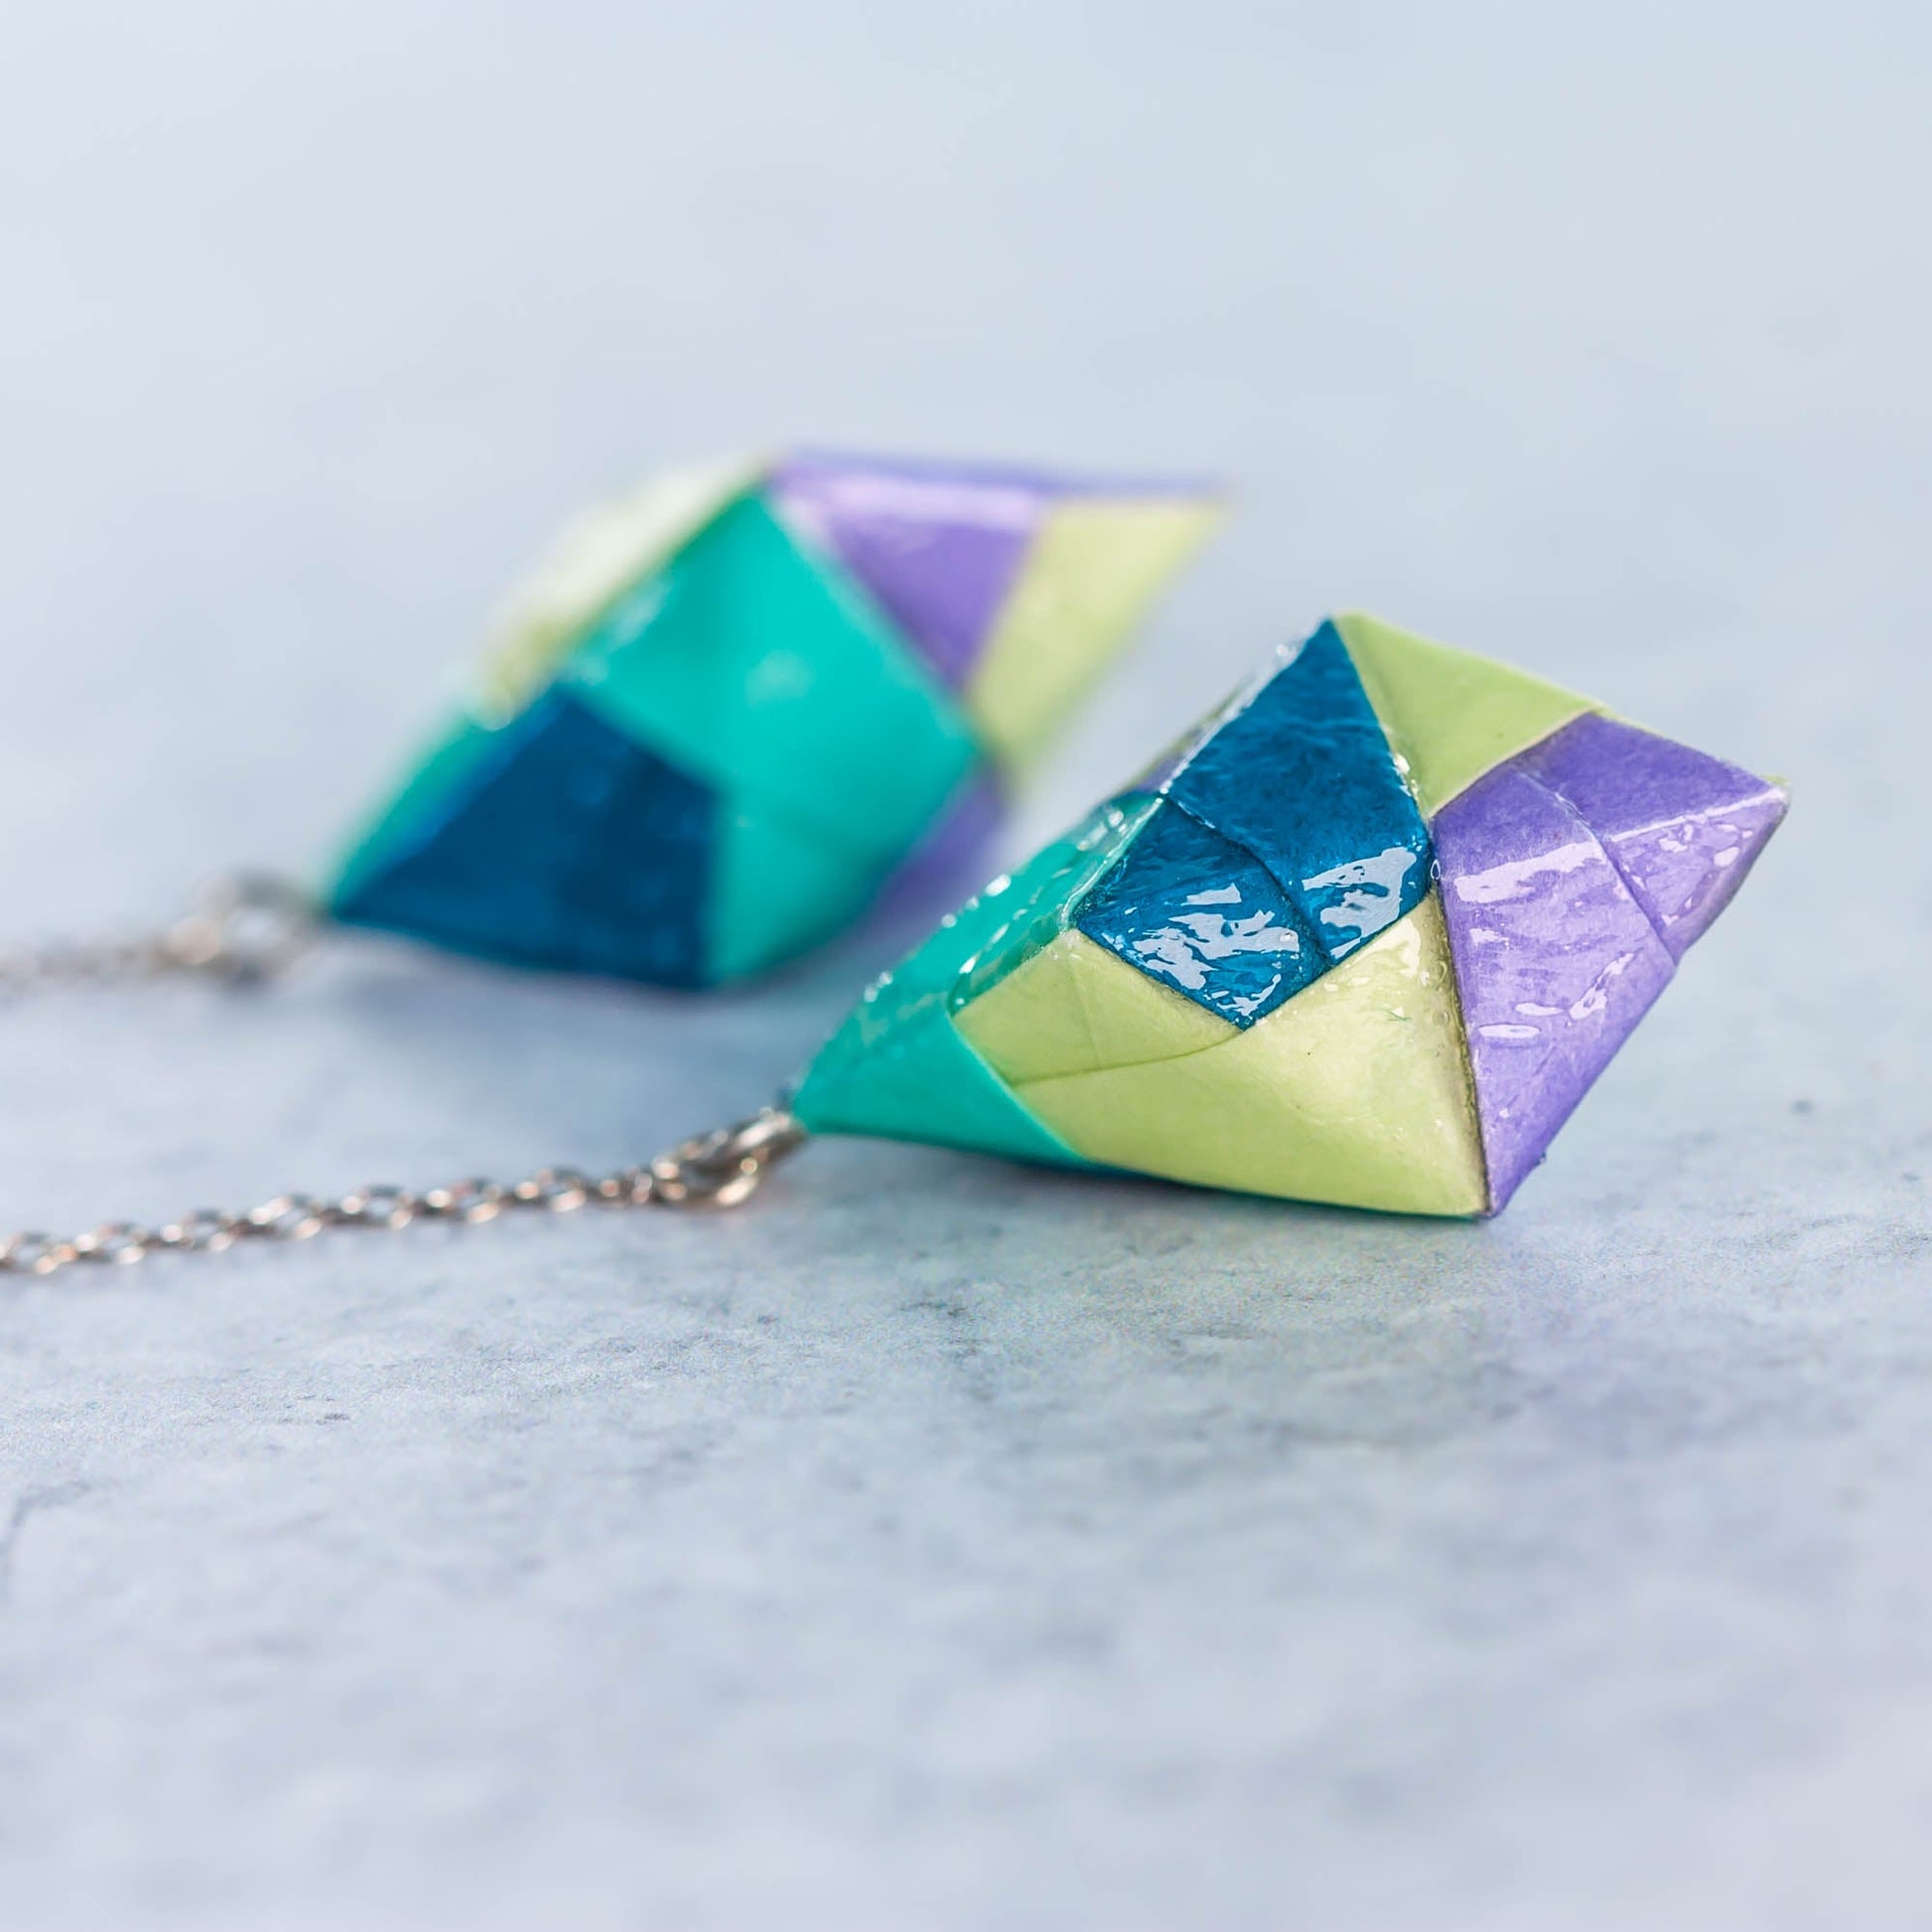 Origami Diamond Paper Earrings - Seafoam Teal Mint Lavender - By LeeMo Designs in Bend, Oregon